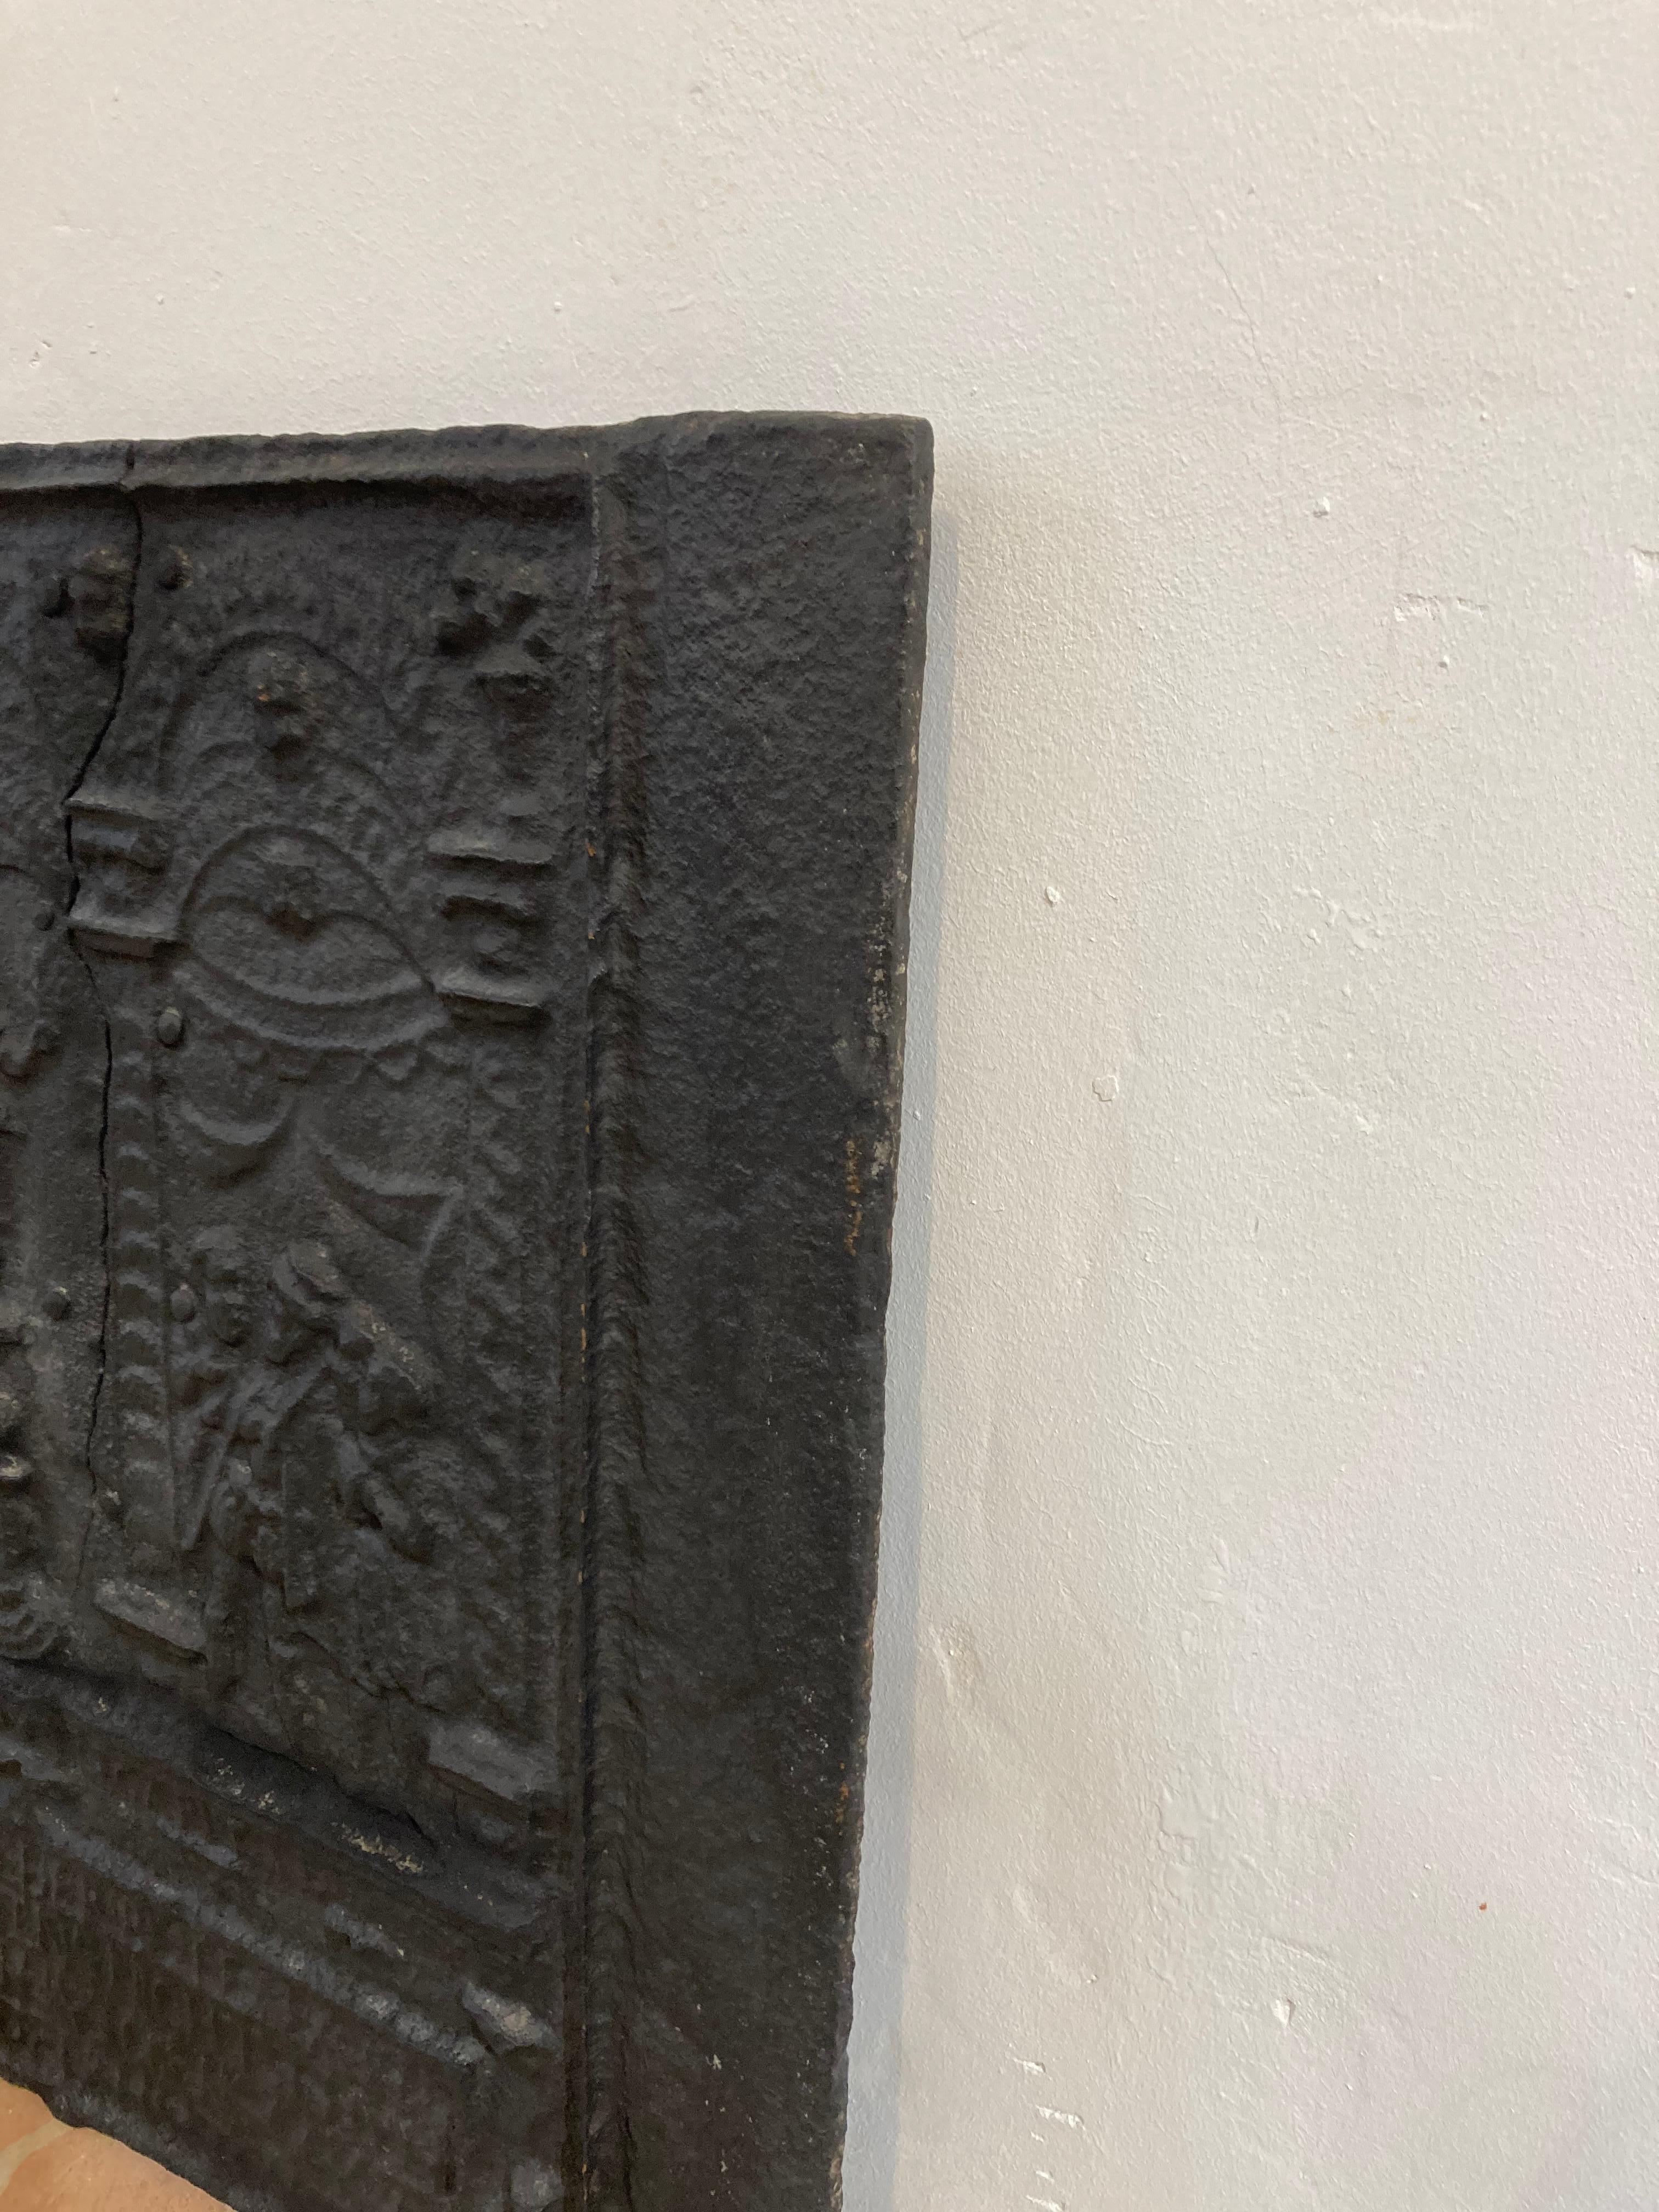 Biblical Antique Fireback or Backsplash In Distressed Condition For Sale In Haarlem, Noord-Holland